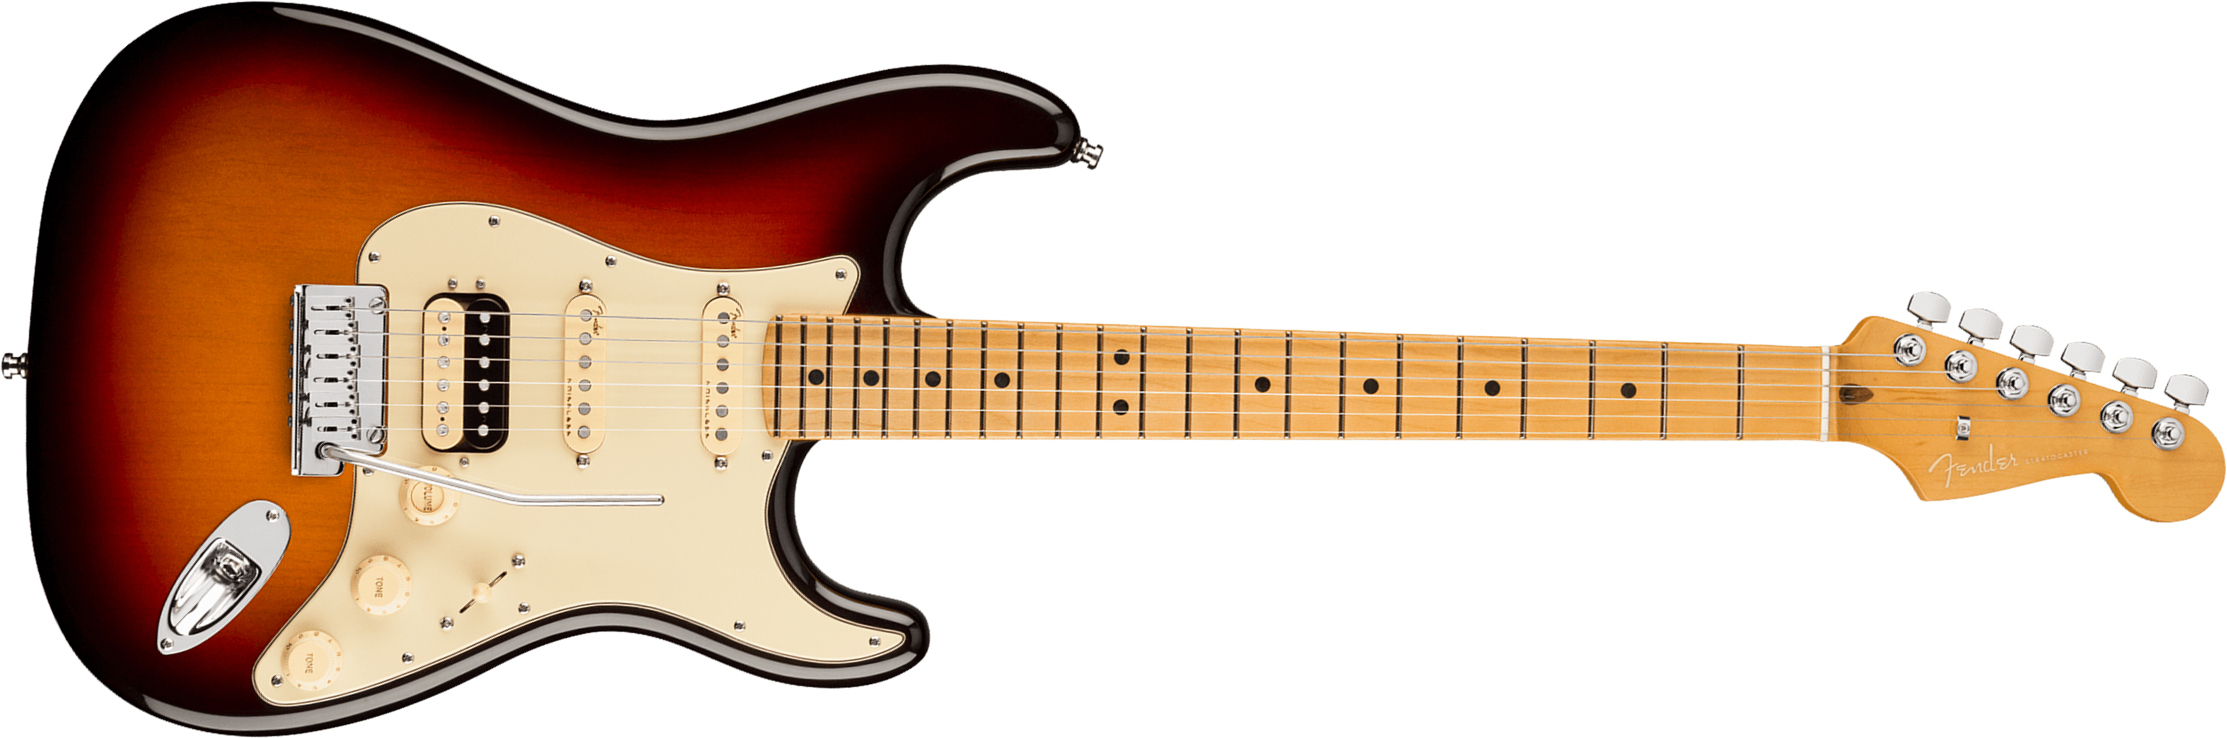 Fender Strat American Ultra Hss 2019 Usa Mn - Ultraburst - Guitarra eléctrica con forma de str. - Main picture